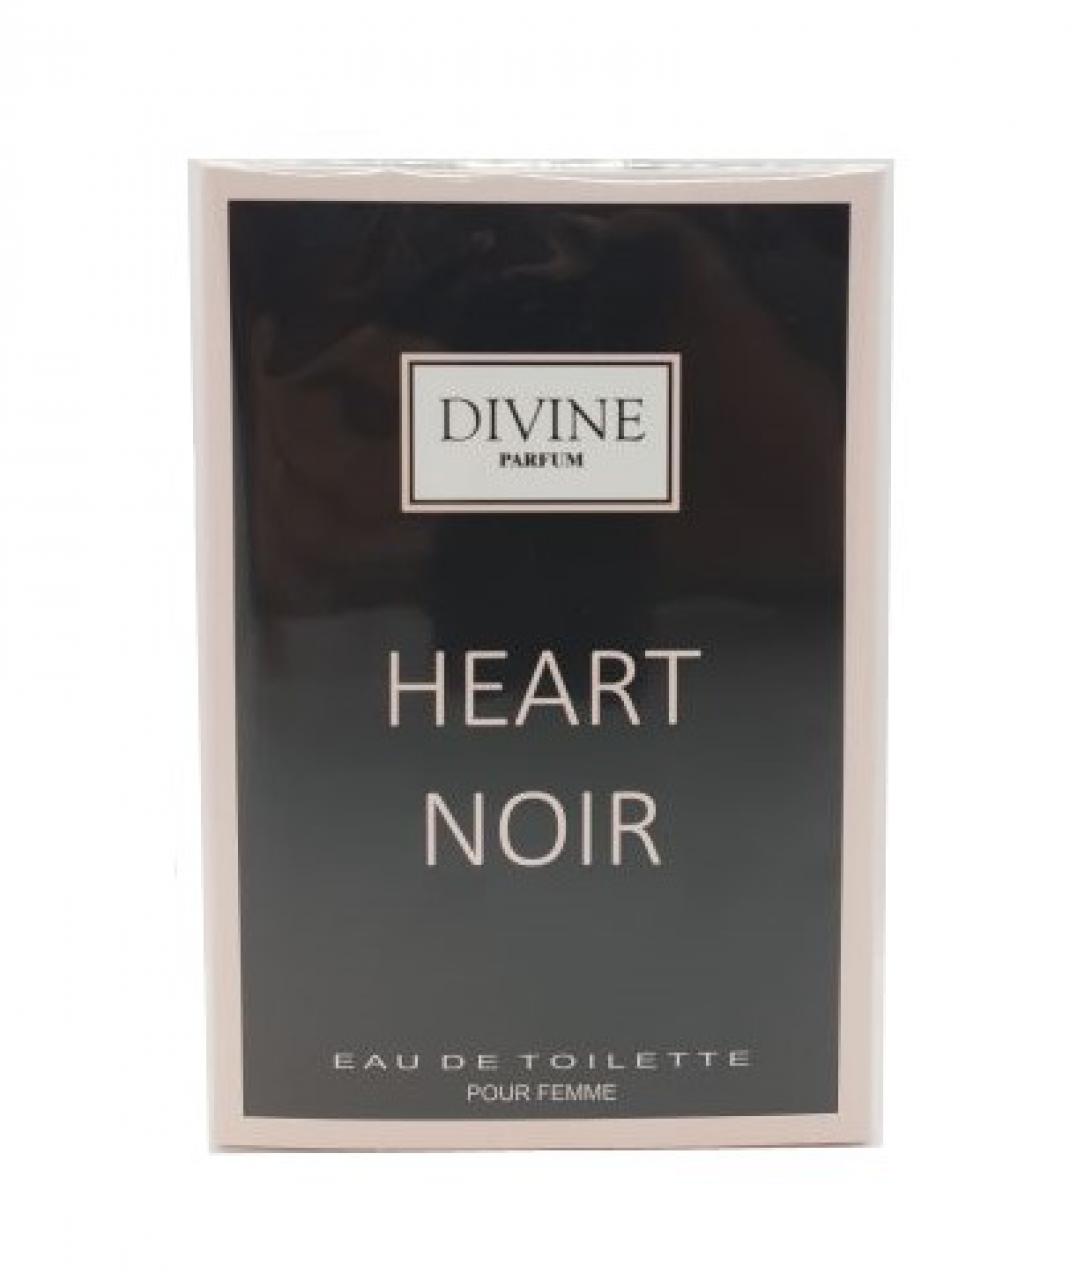 DIVINE PARFUM – HEART NOIR